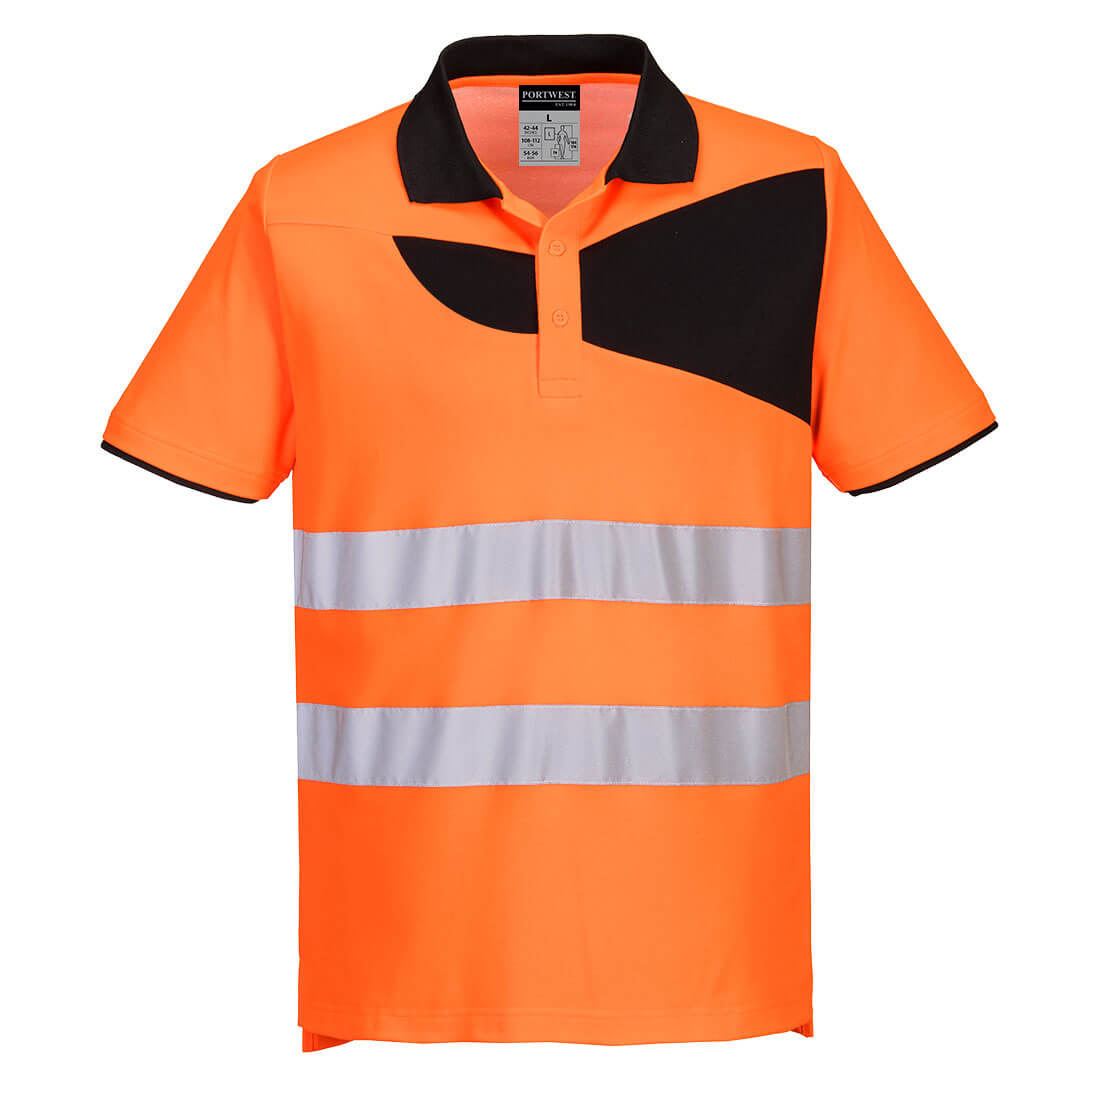 Portwest PW2 Hi-Vis Cotton Comfort Orange/Yellow Polo Shirt